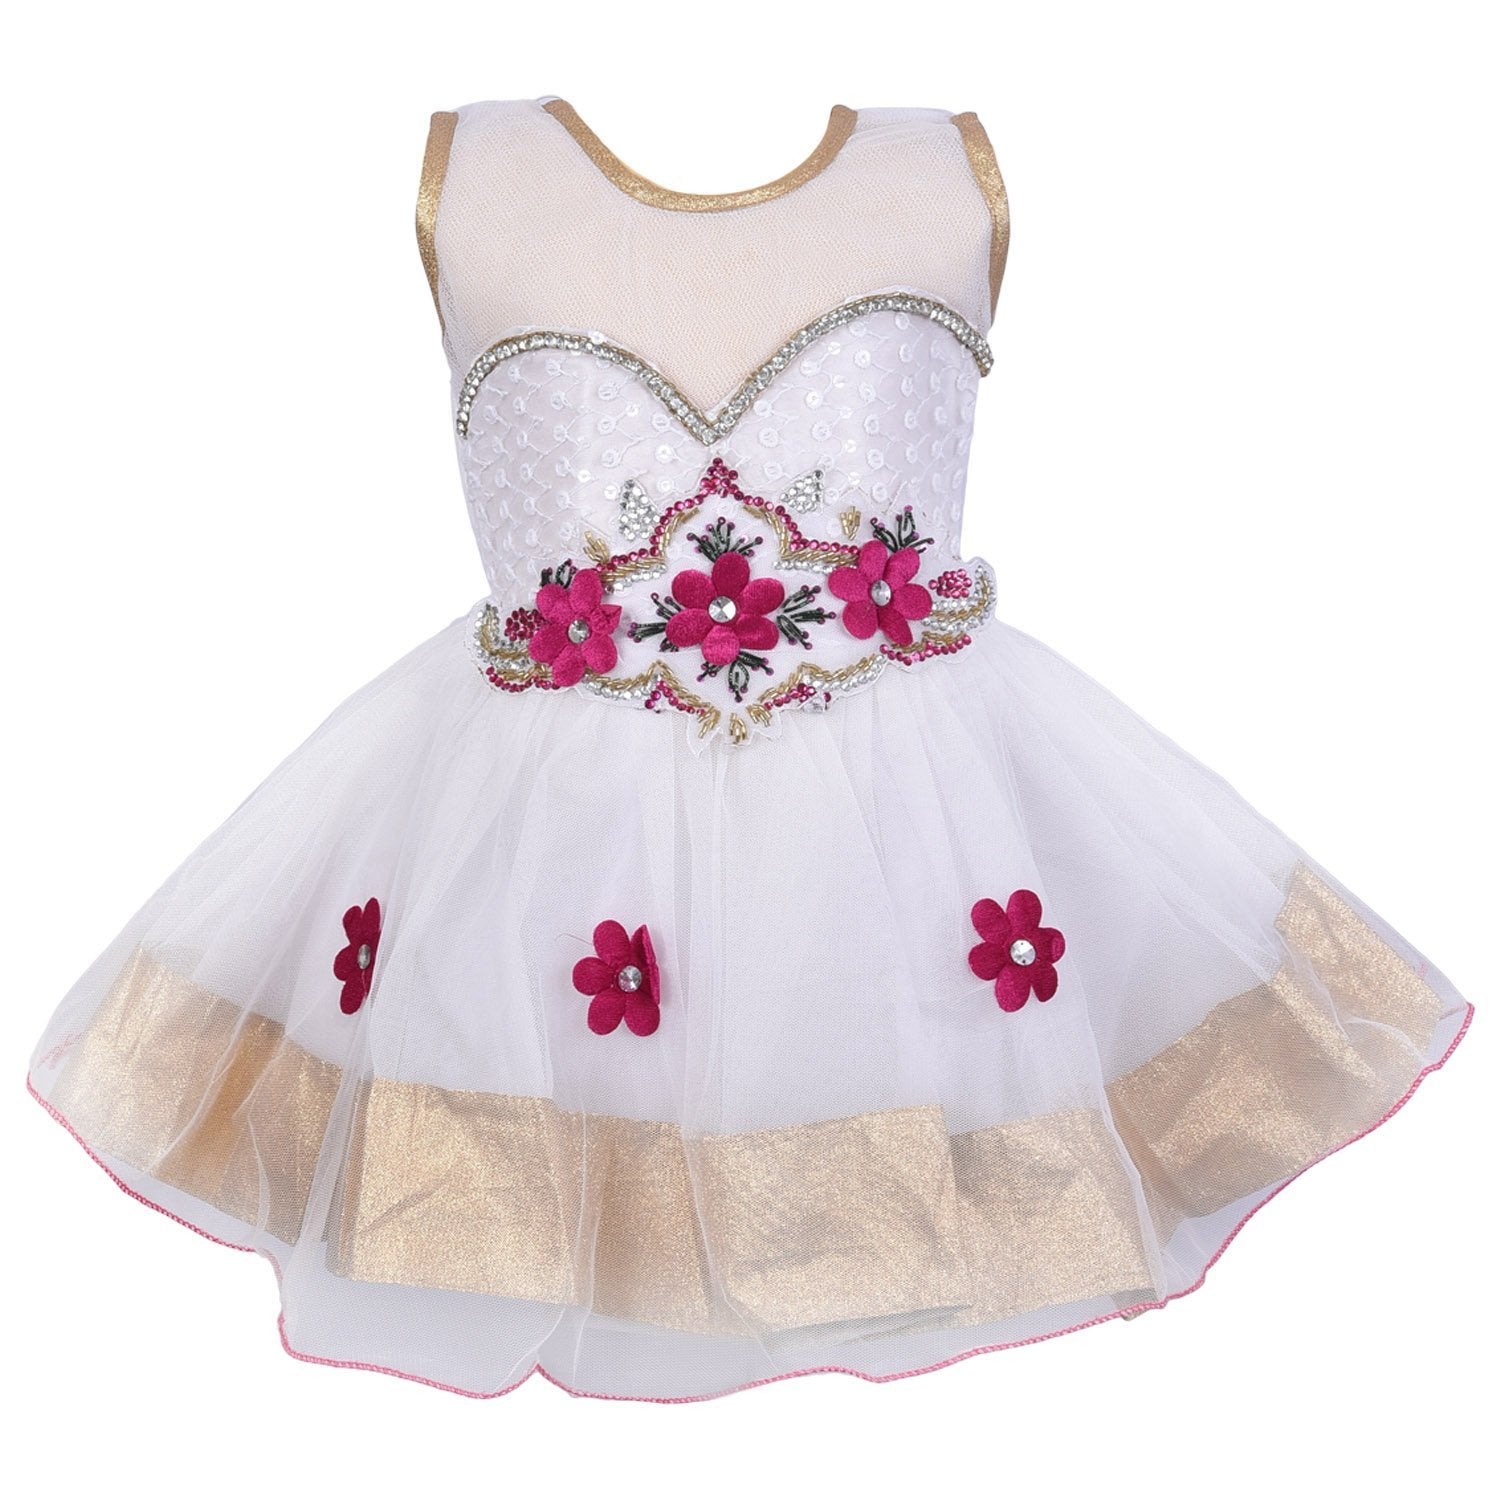 Baby Girls Frock Dress fr10pinknw - Wish Karo Party Wear - frocks Party Wear - baby dress